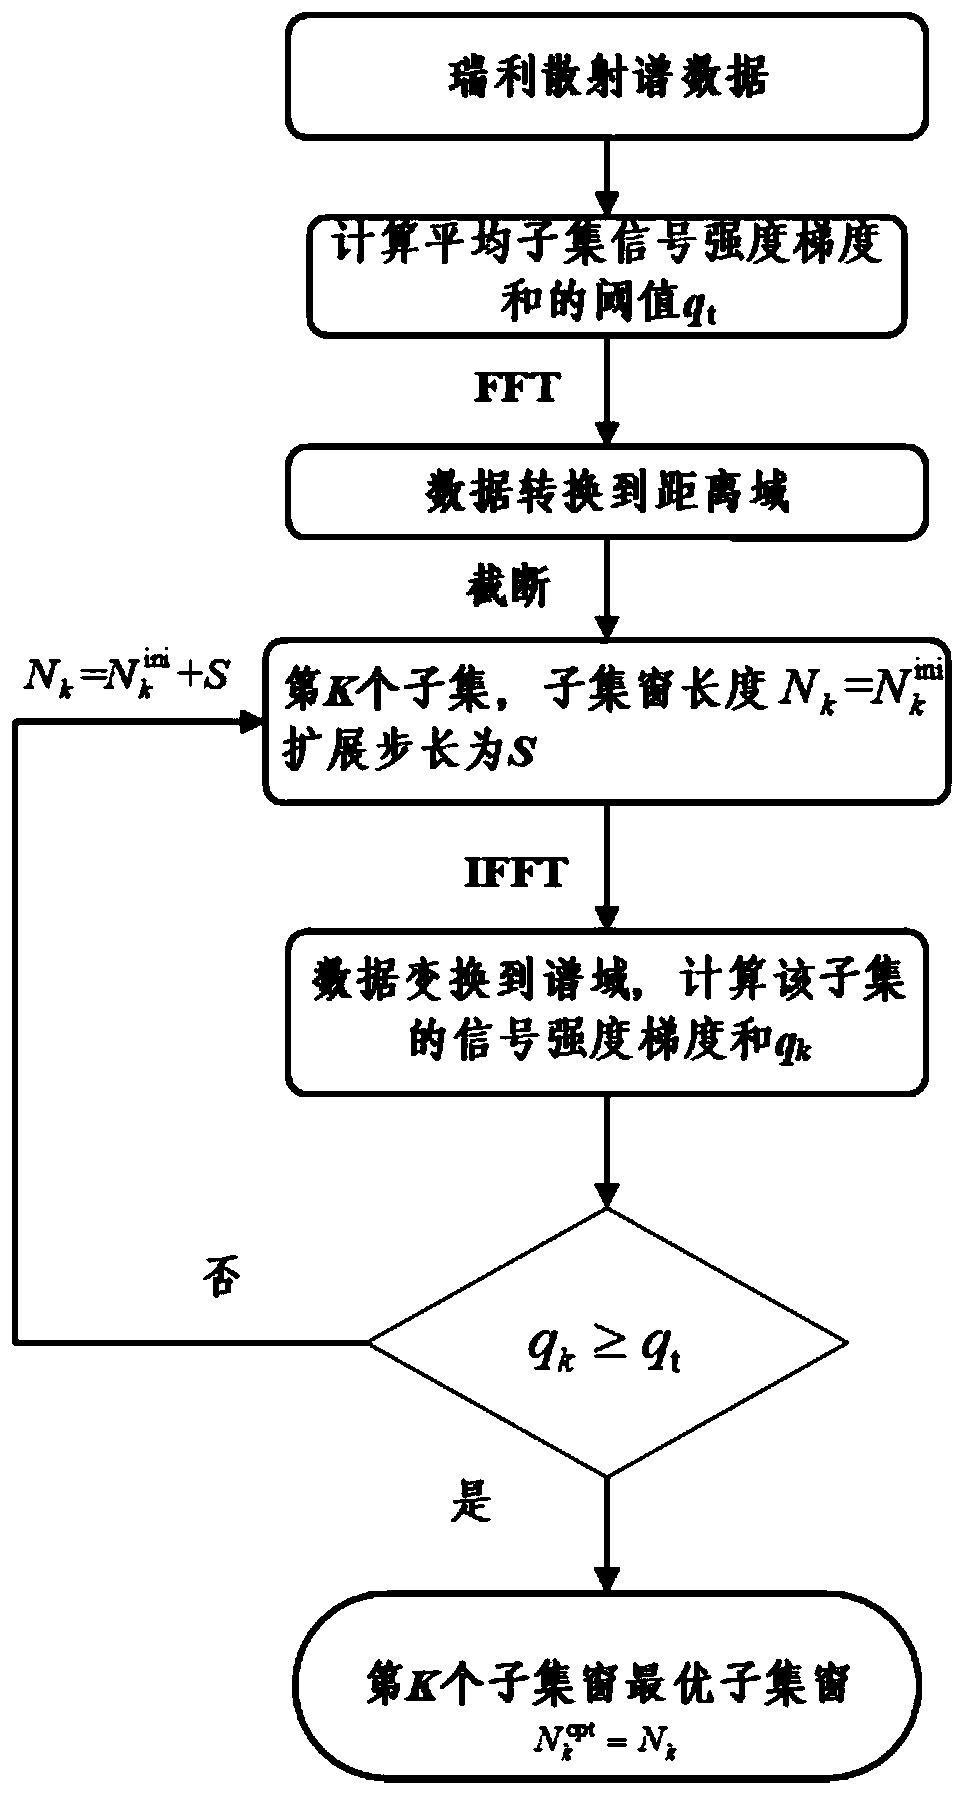 A Distributed Fiber Strain Demodulation Method Based on Subset Window Adaptive Algorithm